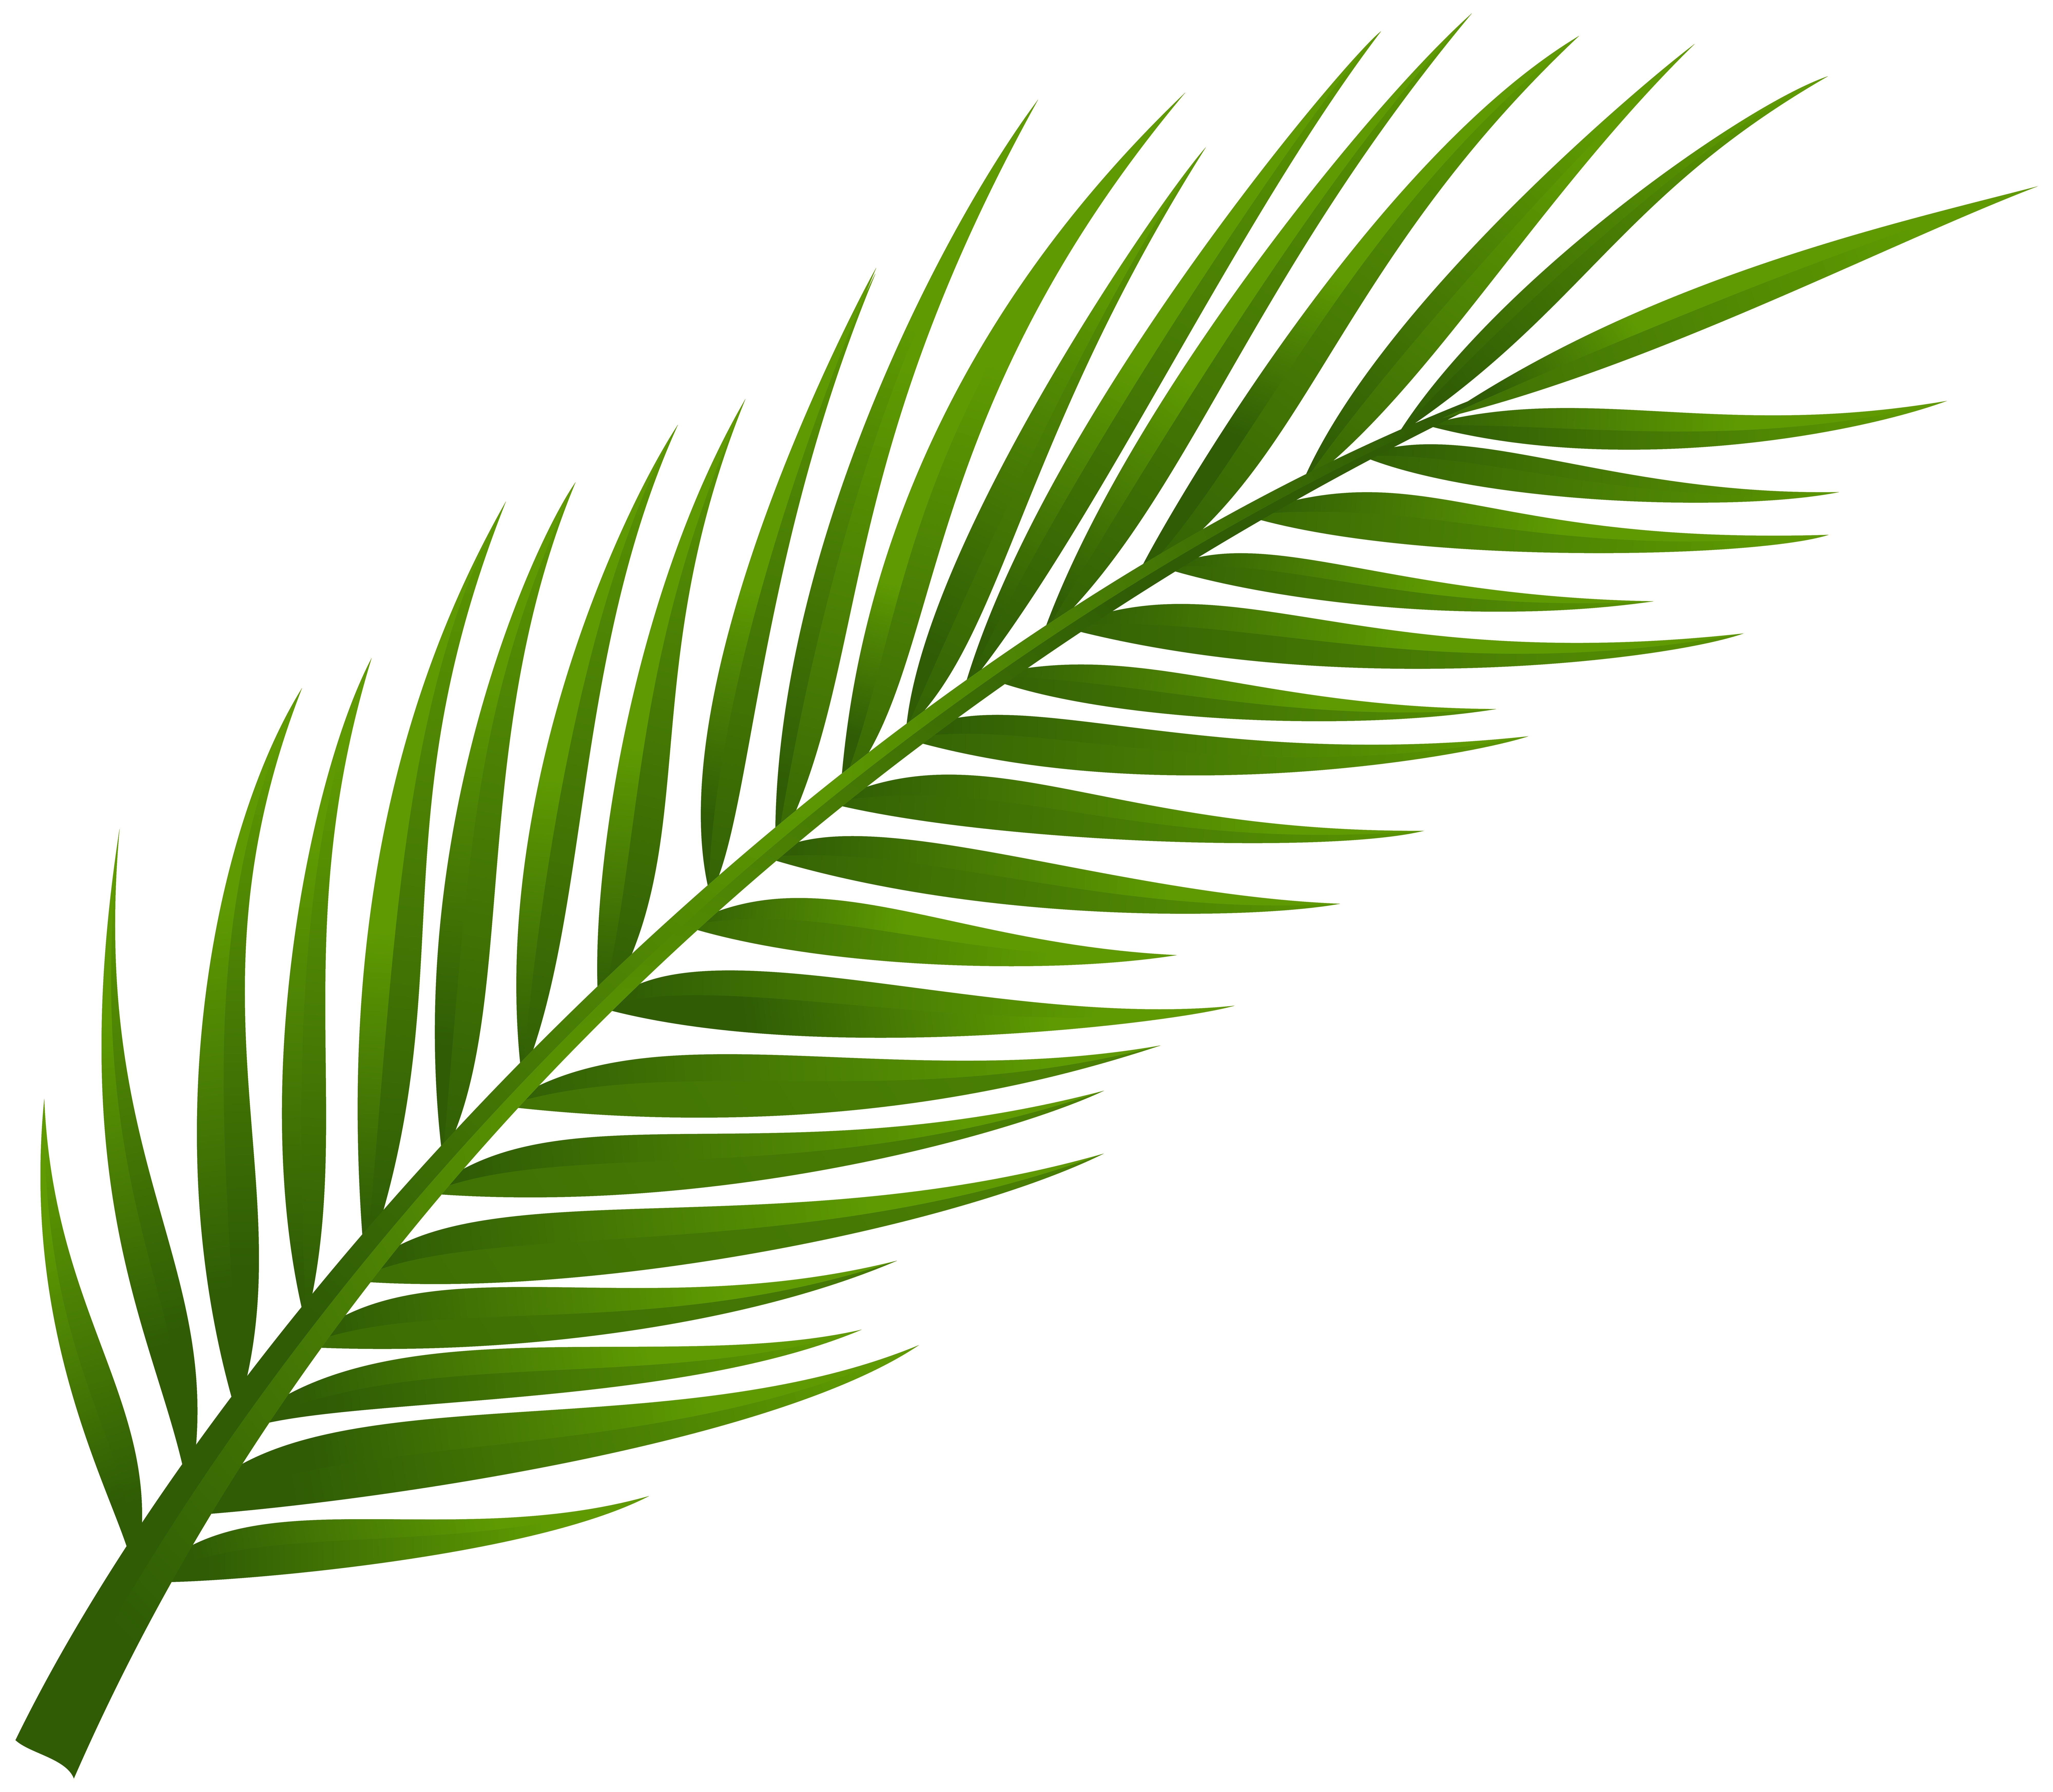 Palm Leaf Clip Art